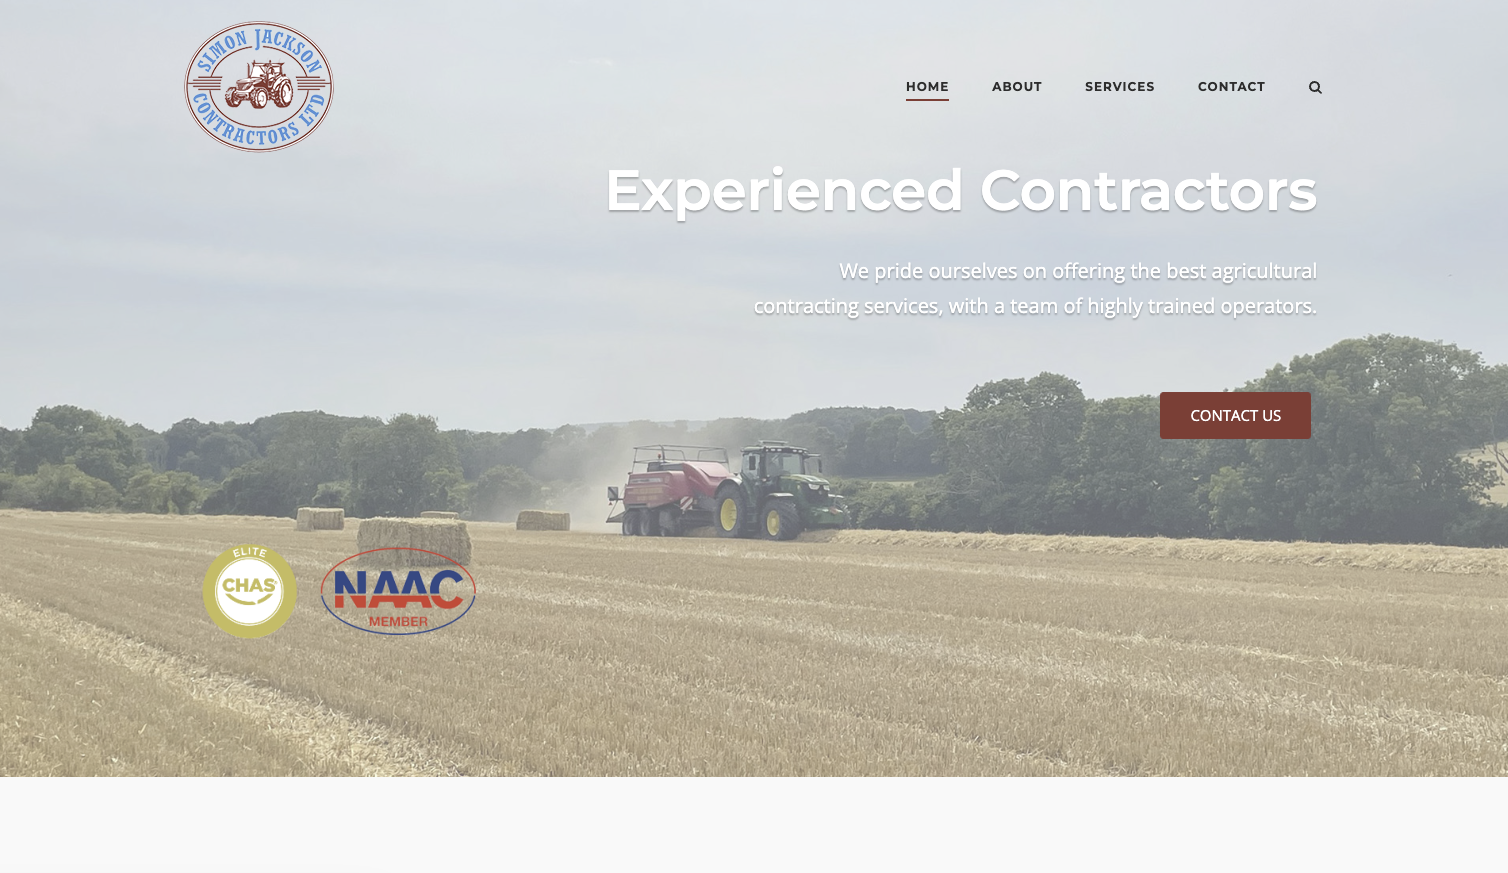 Screenshot of the Simon Jackson Contractors homepage